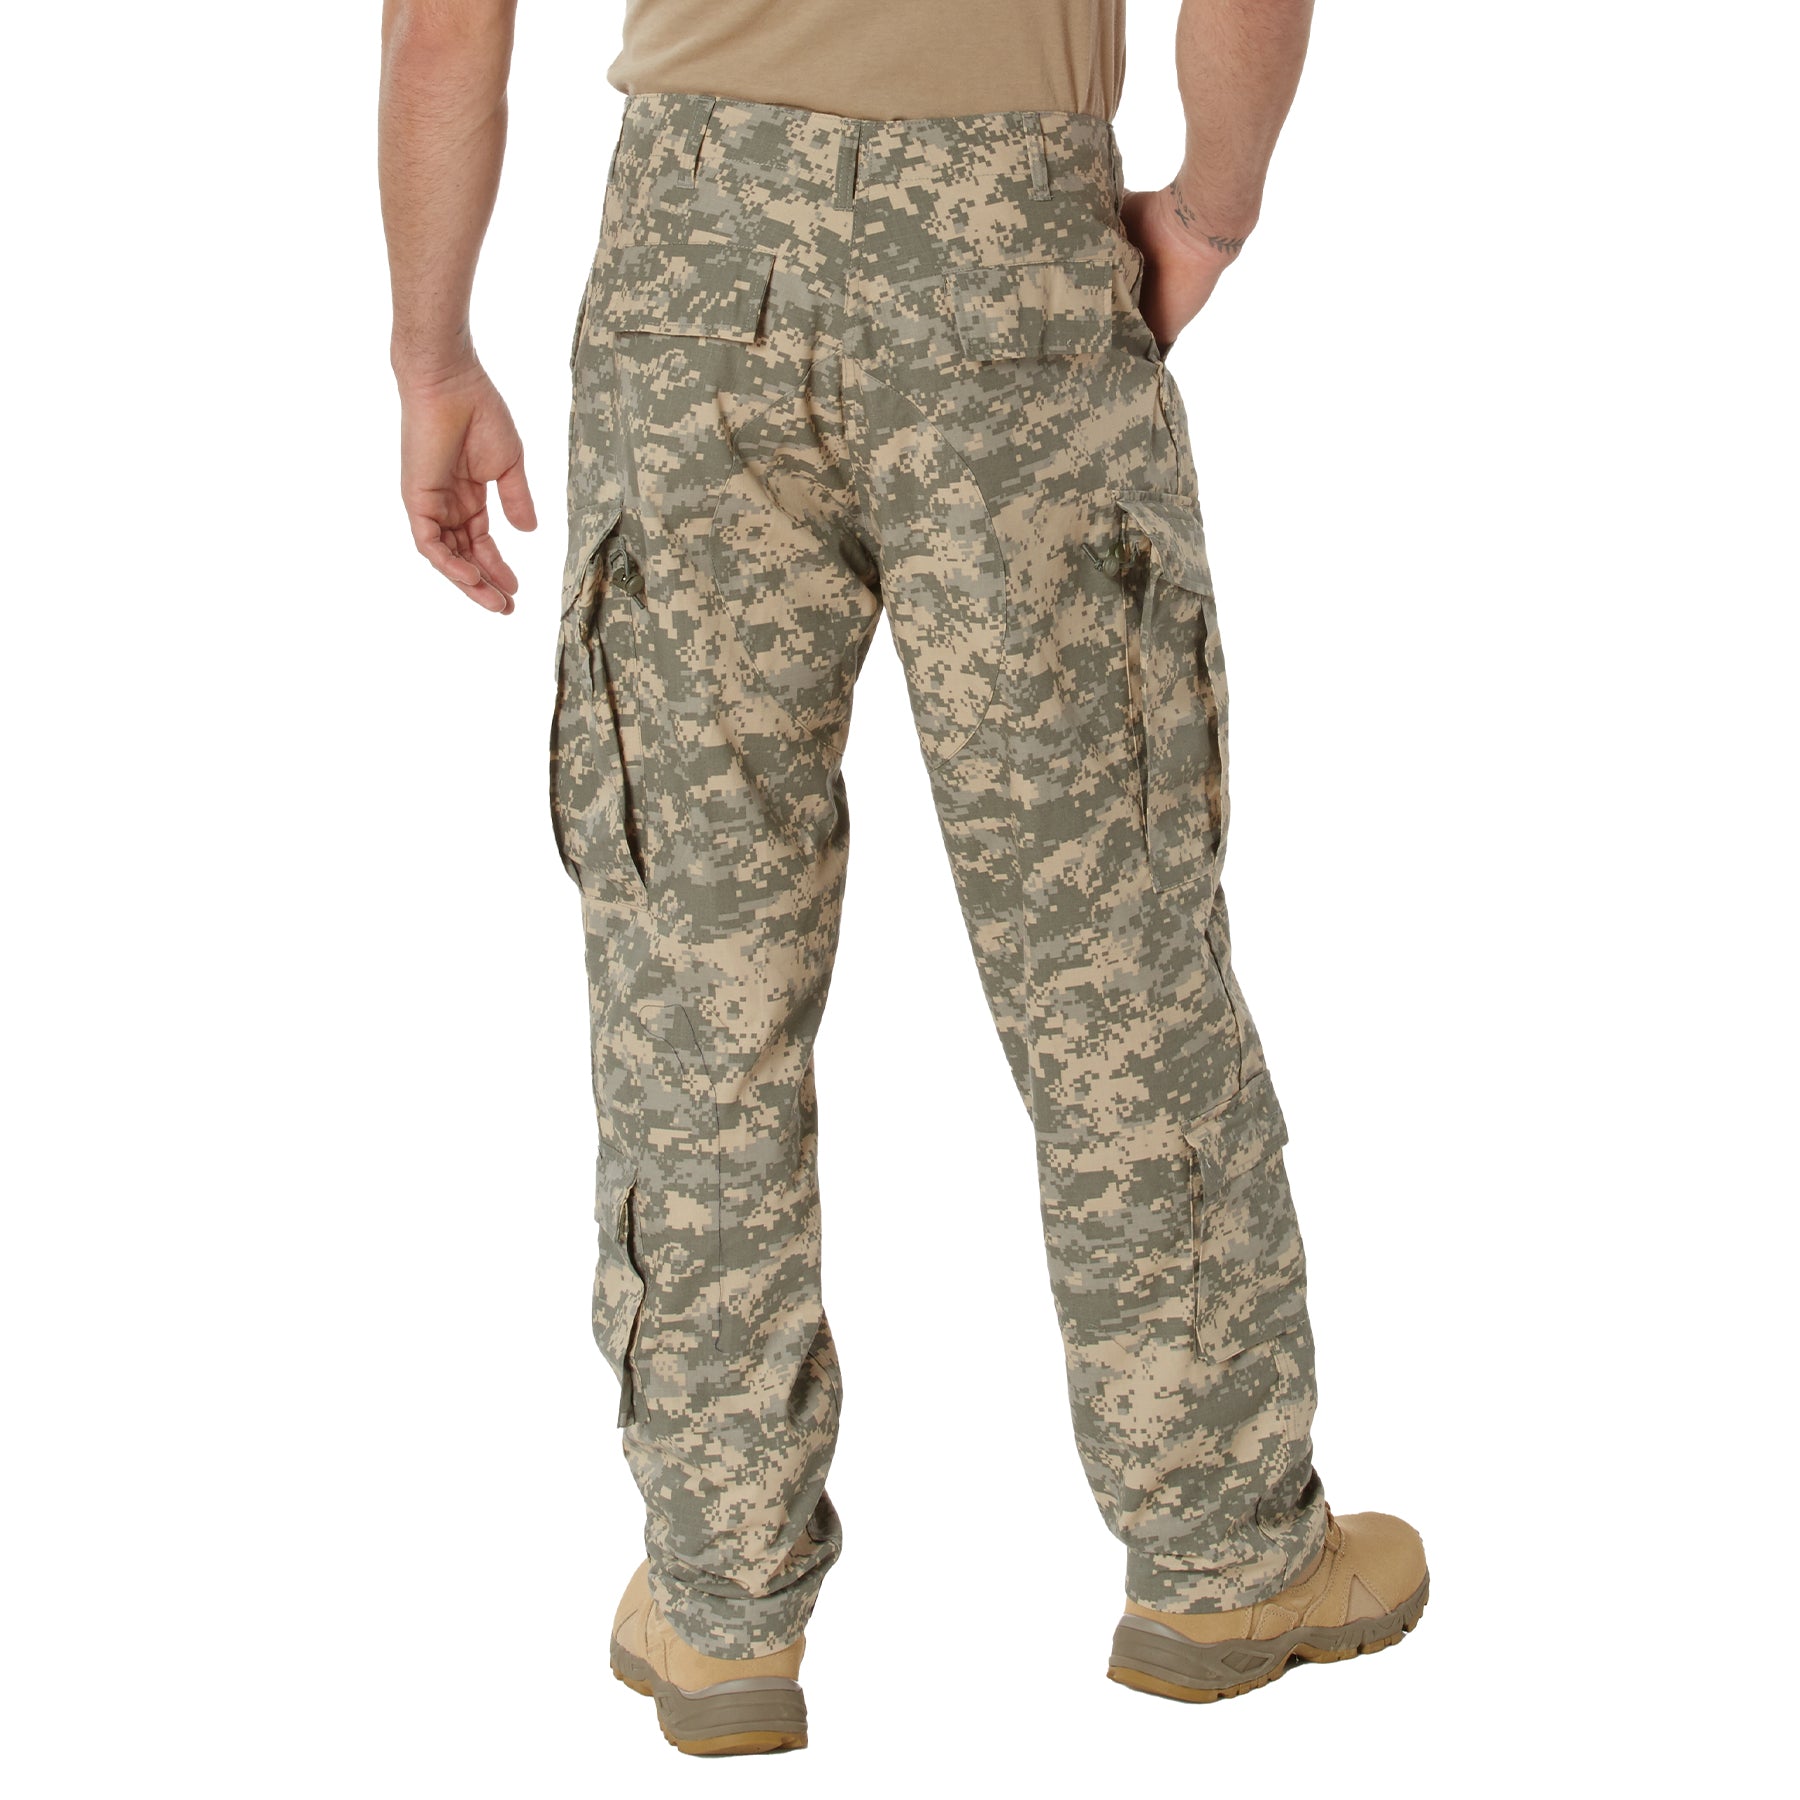 [Military] Digital Camo Poly/Cotton Rip-Stop Combat Uniform Pants